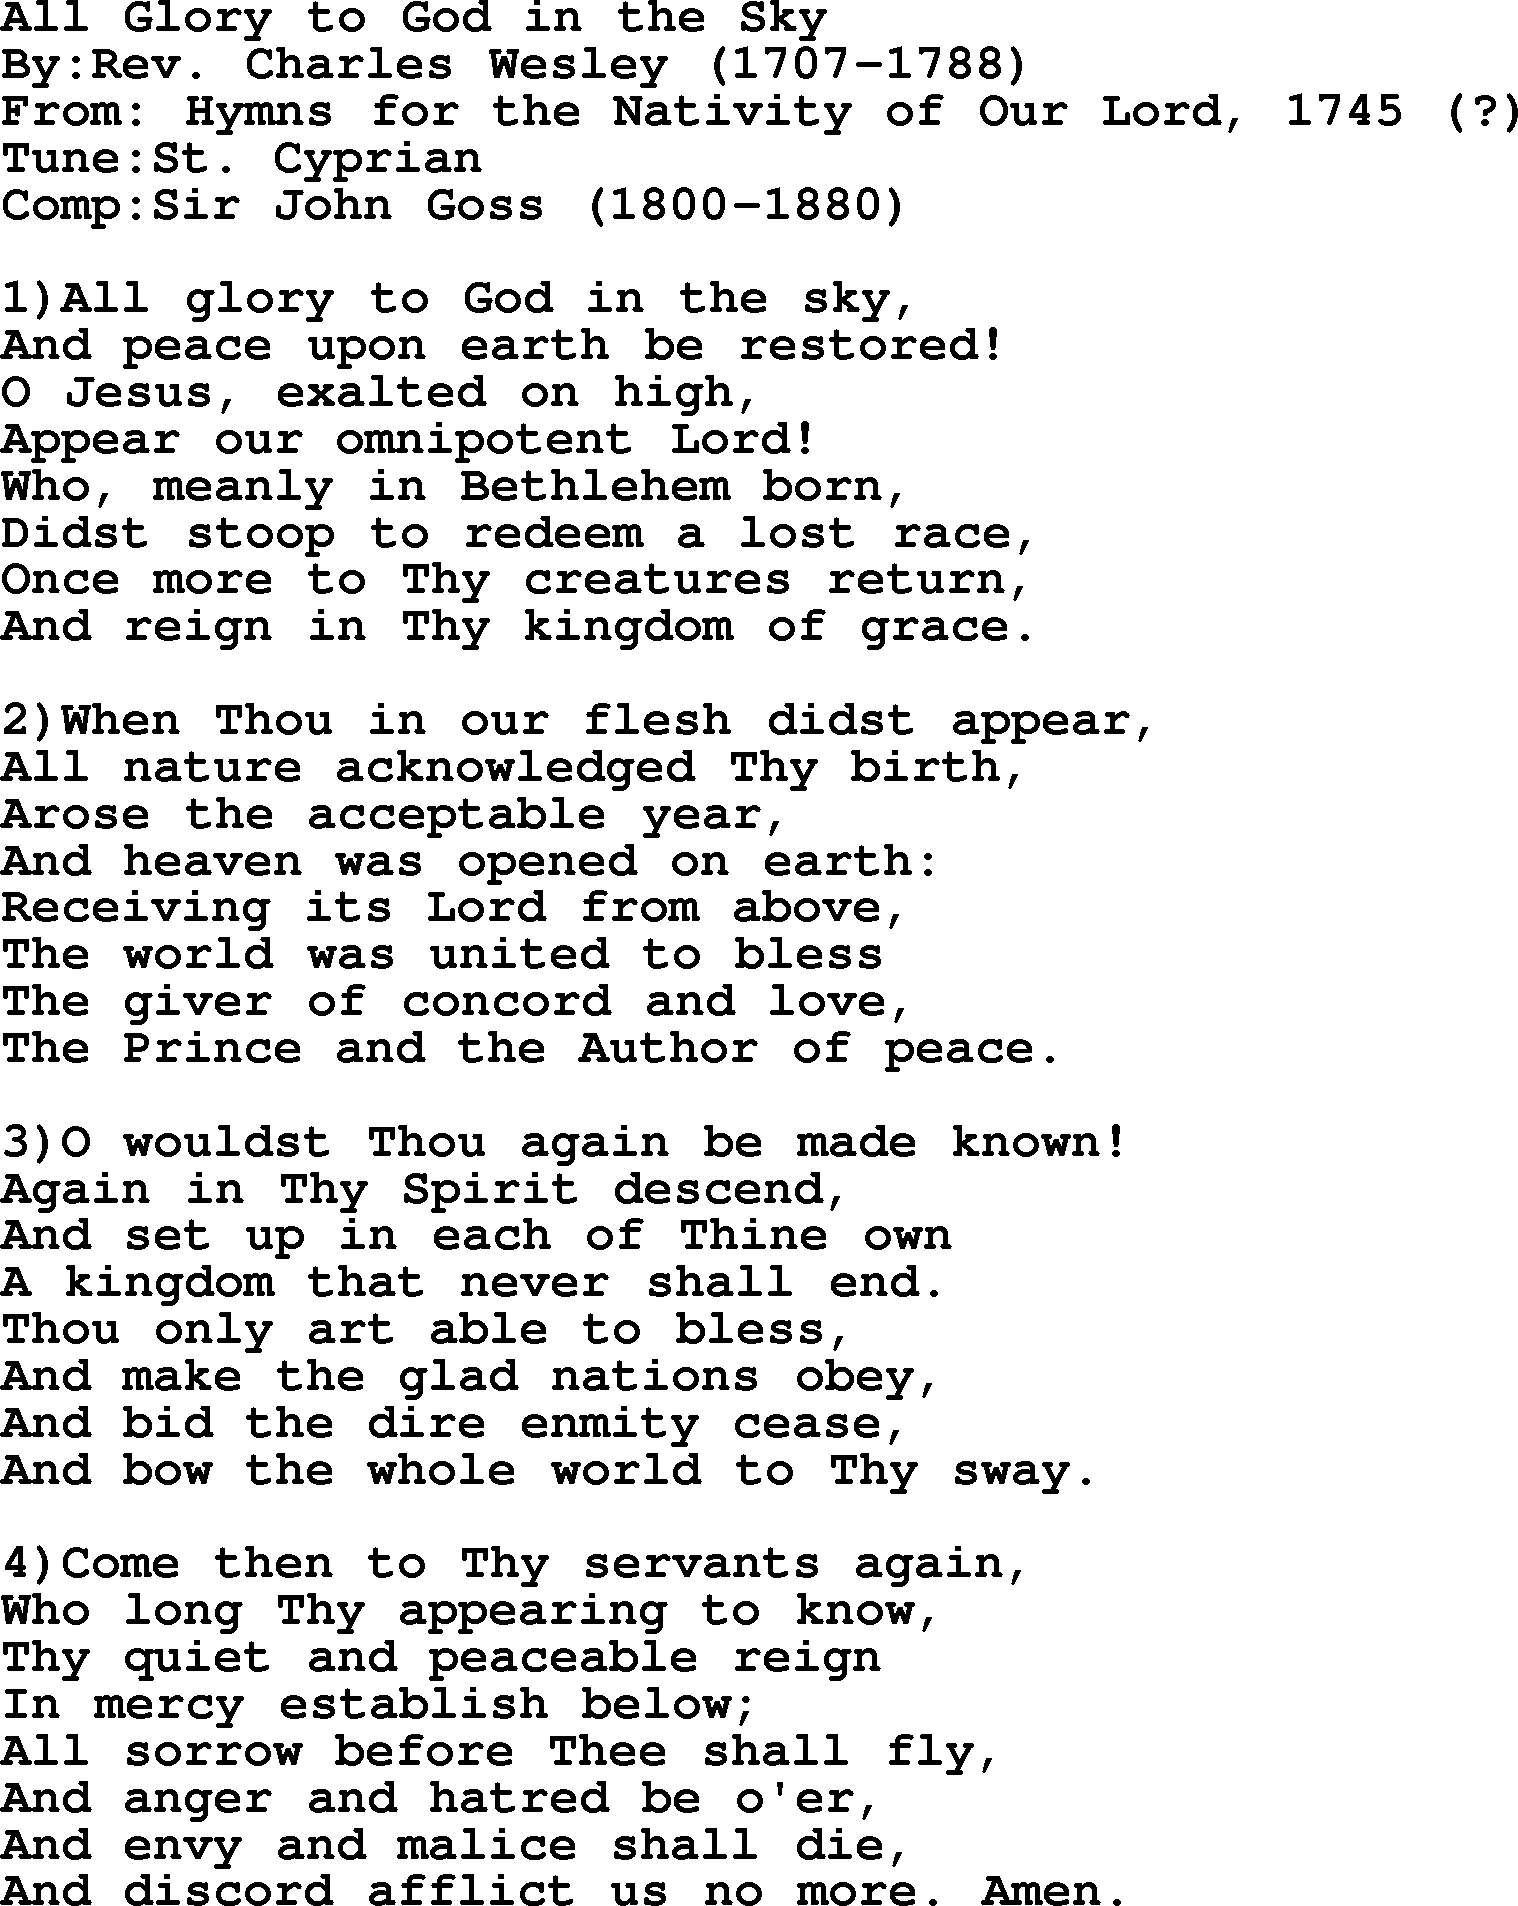 Methodist Hymn: All Glory To God In The Sky, lyrics